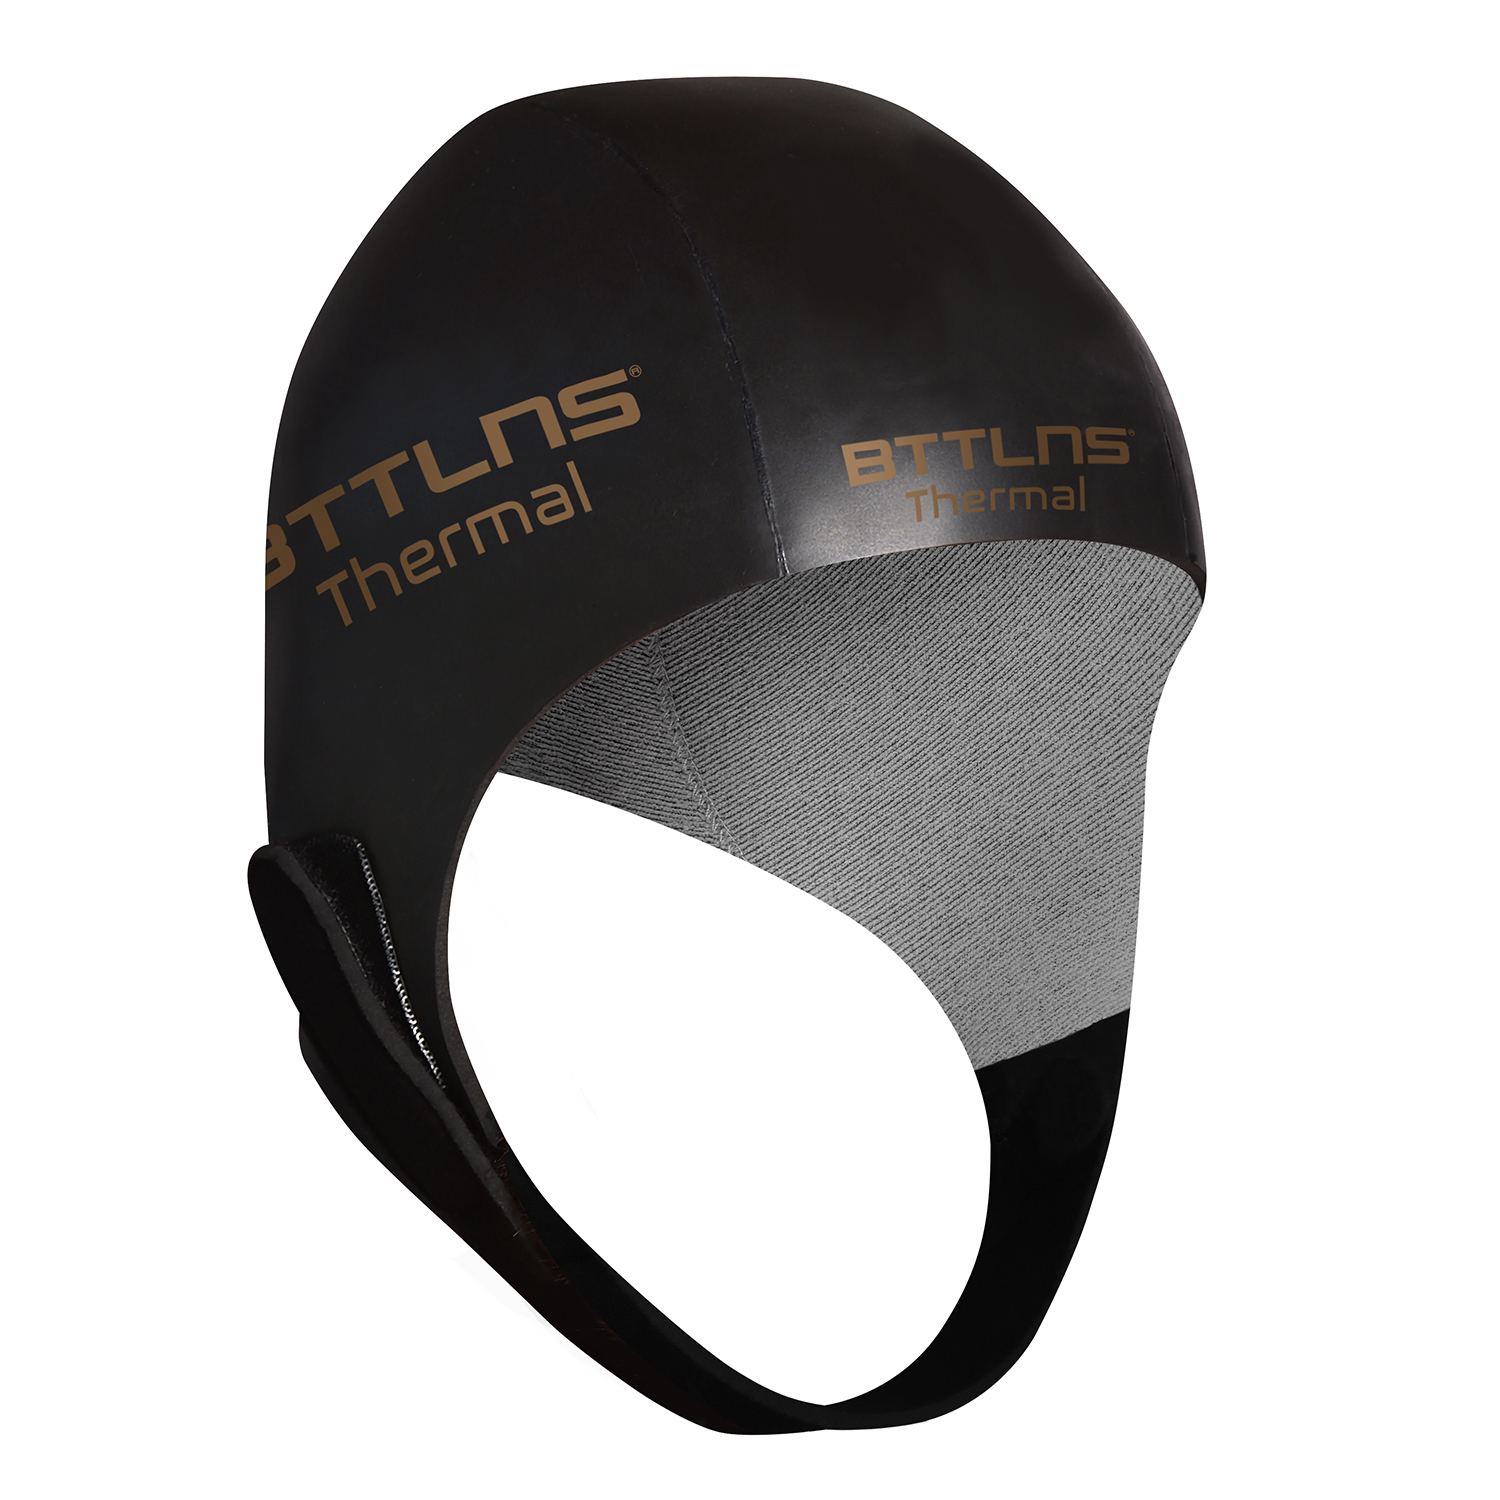 BTTLNS Neoprene thermal swim cap Zethes 1.0 gold  0121015-087